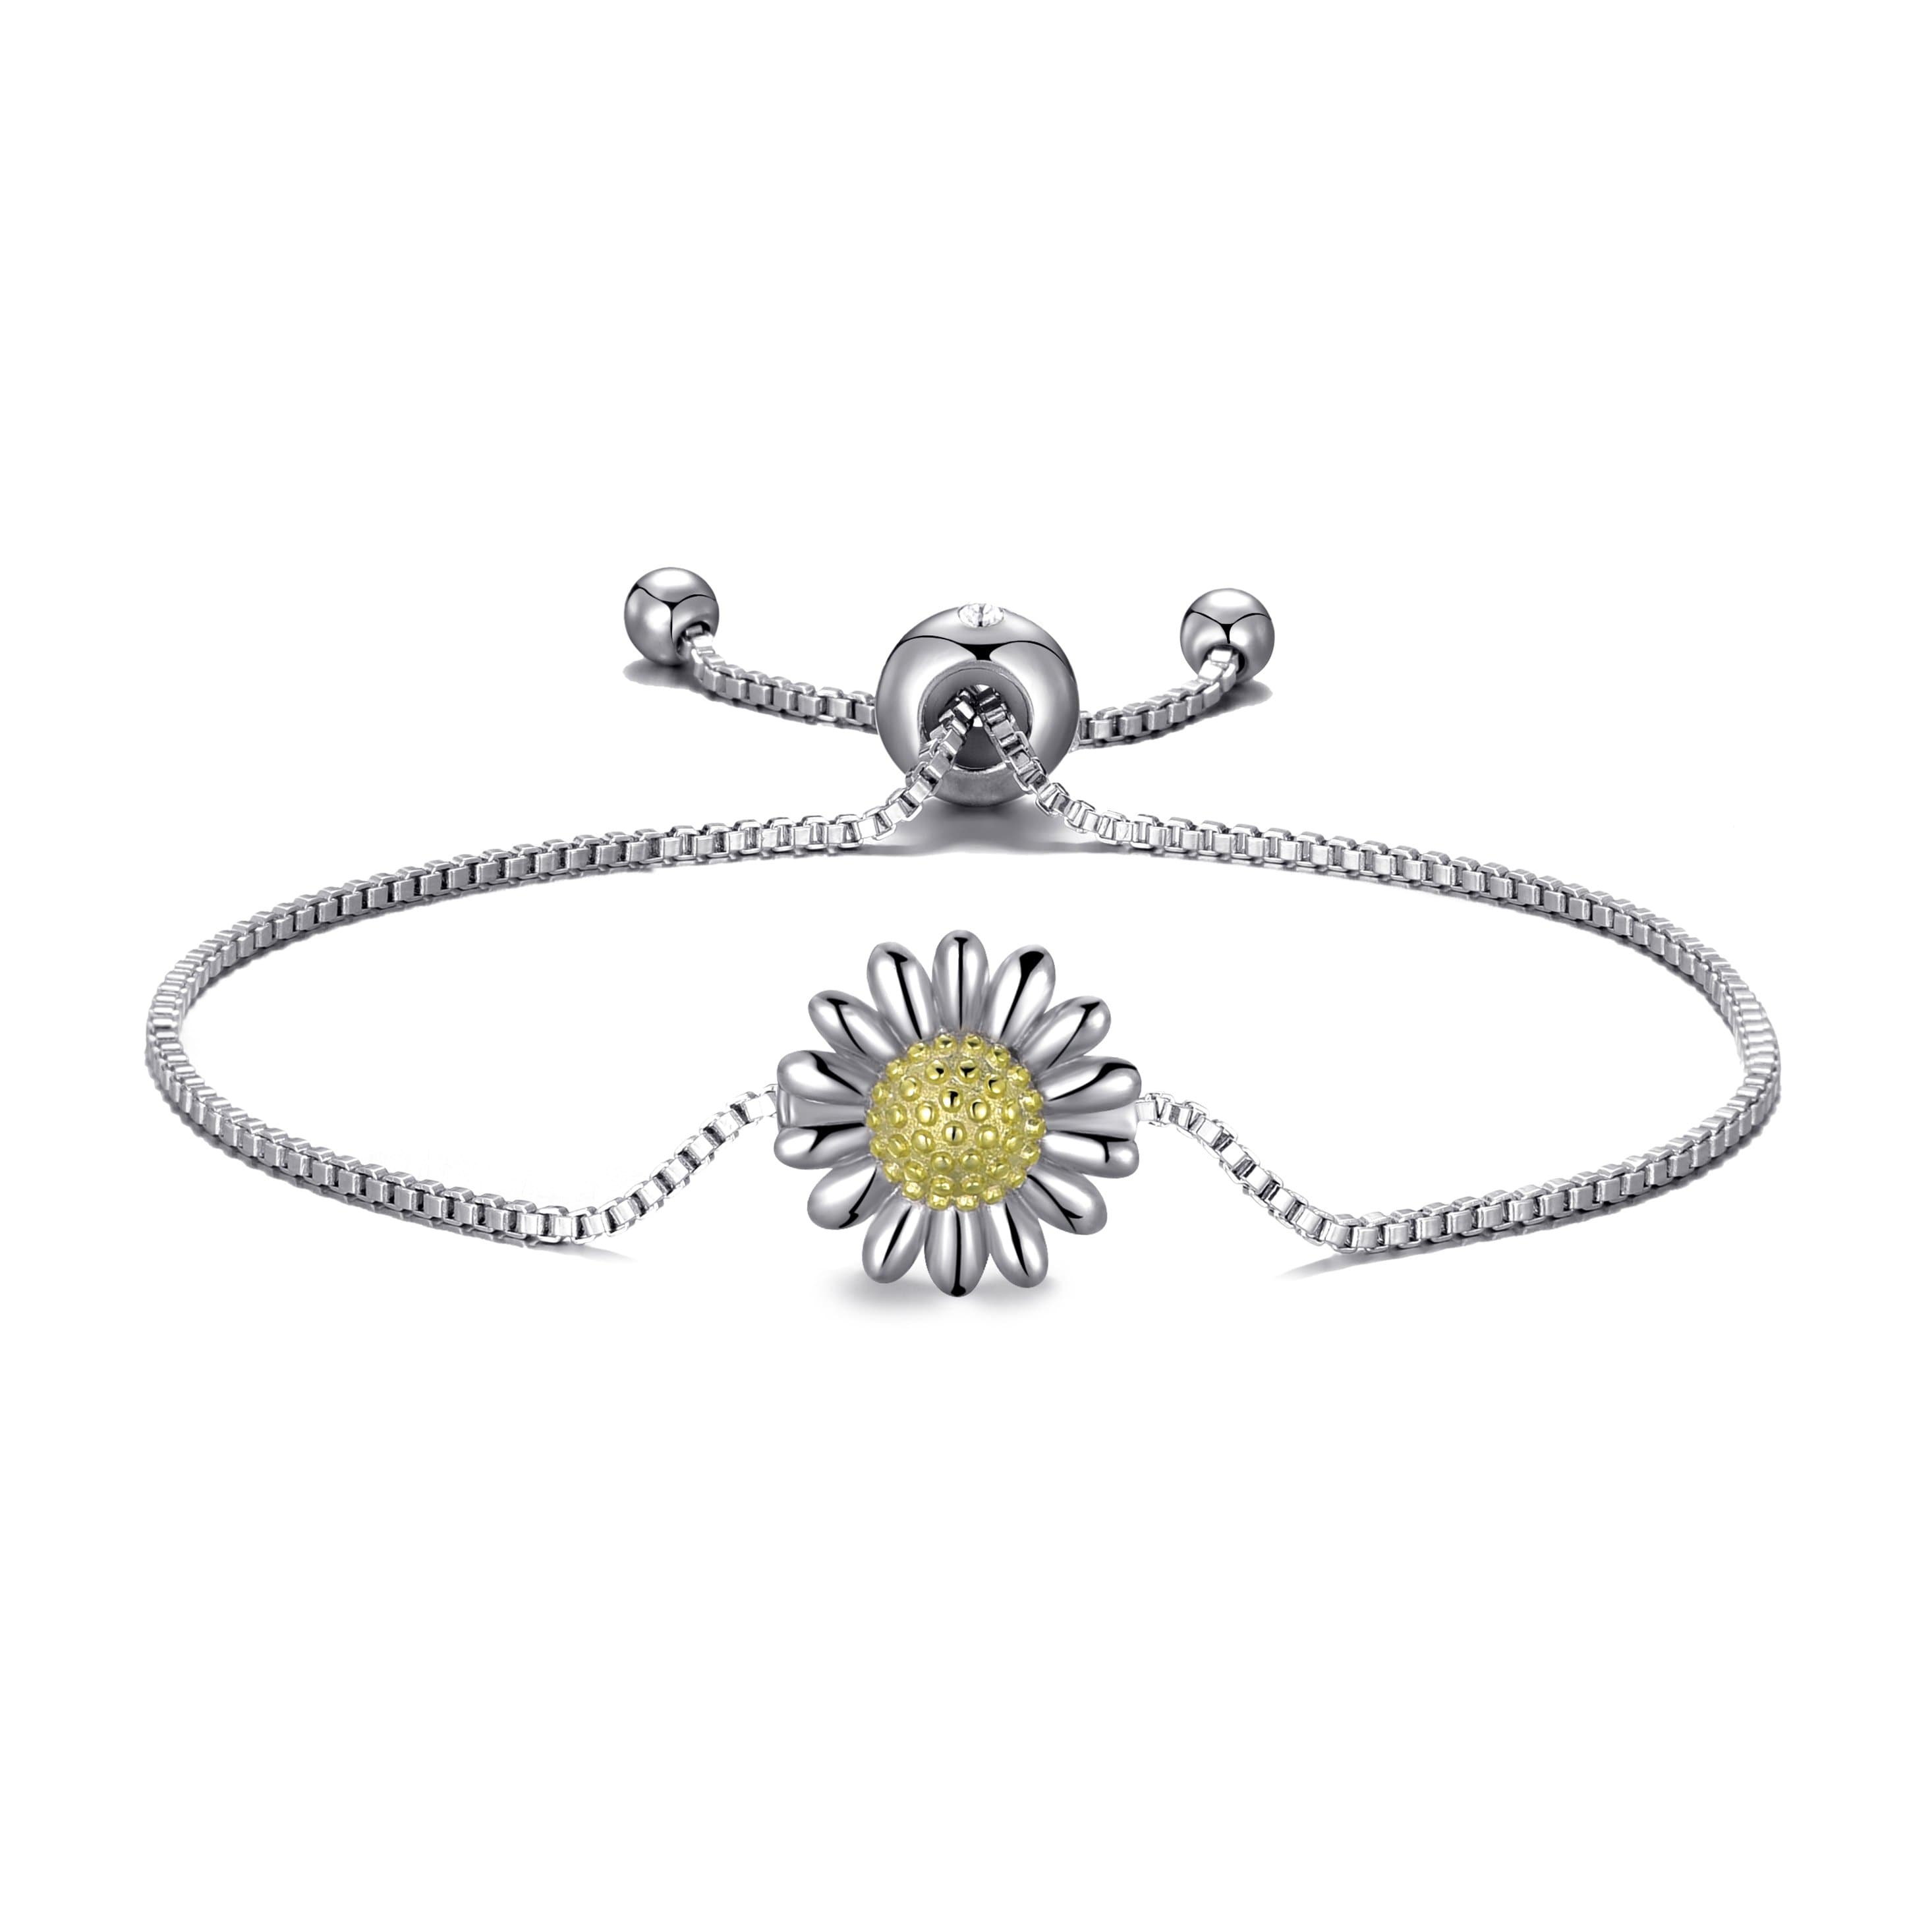 Daisy Friendship Bracelet Created with Zircondia® Crystals by Philip Jones Jewellery